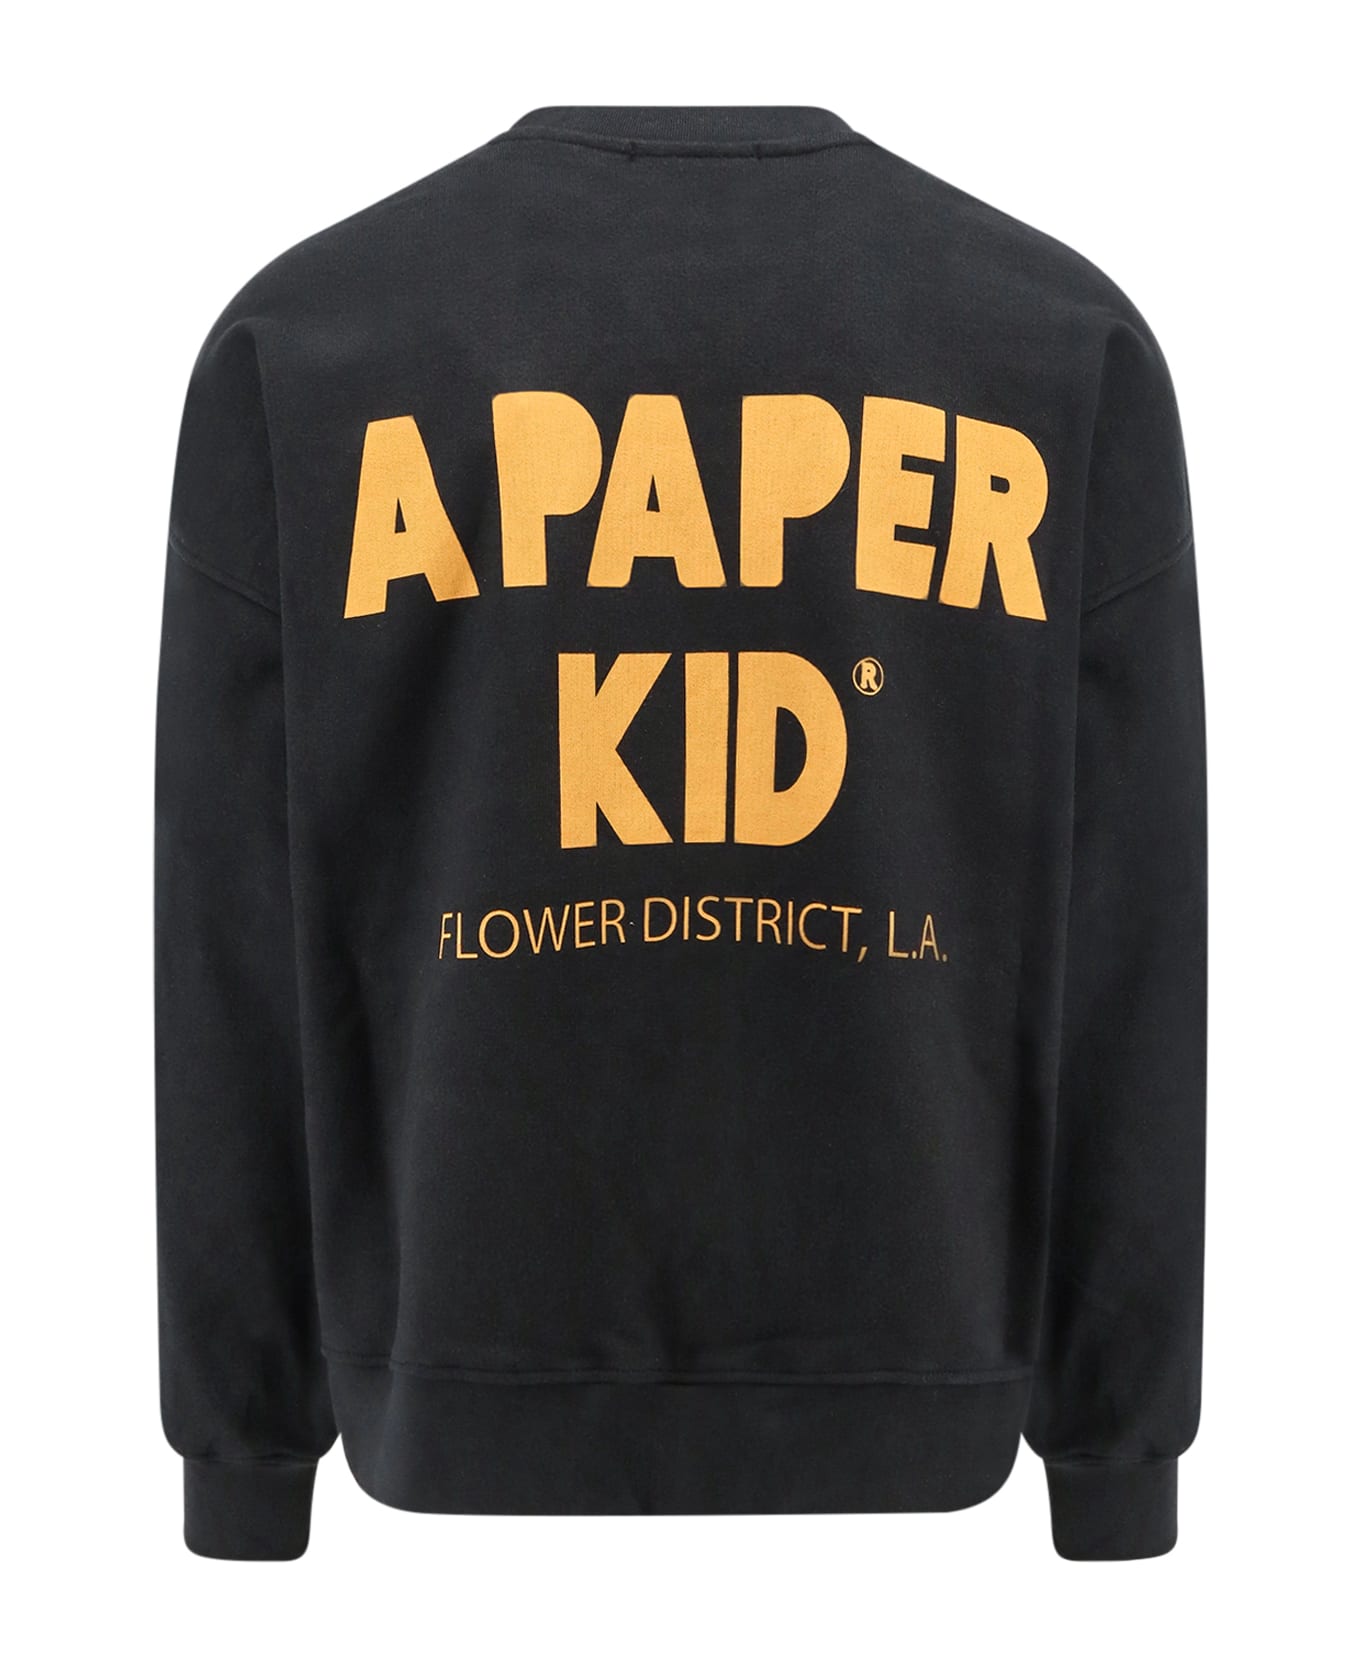 A Paper Kid Sweatshirt